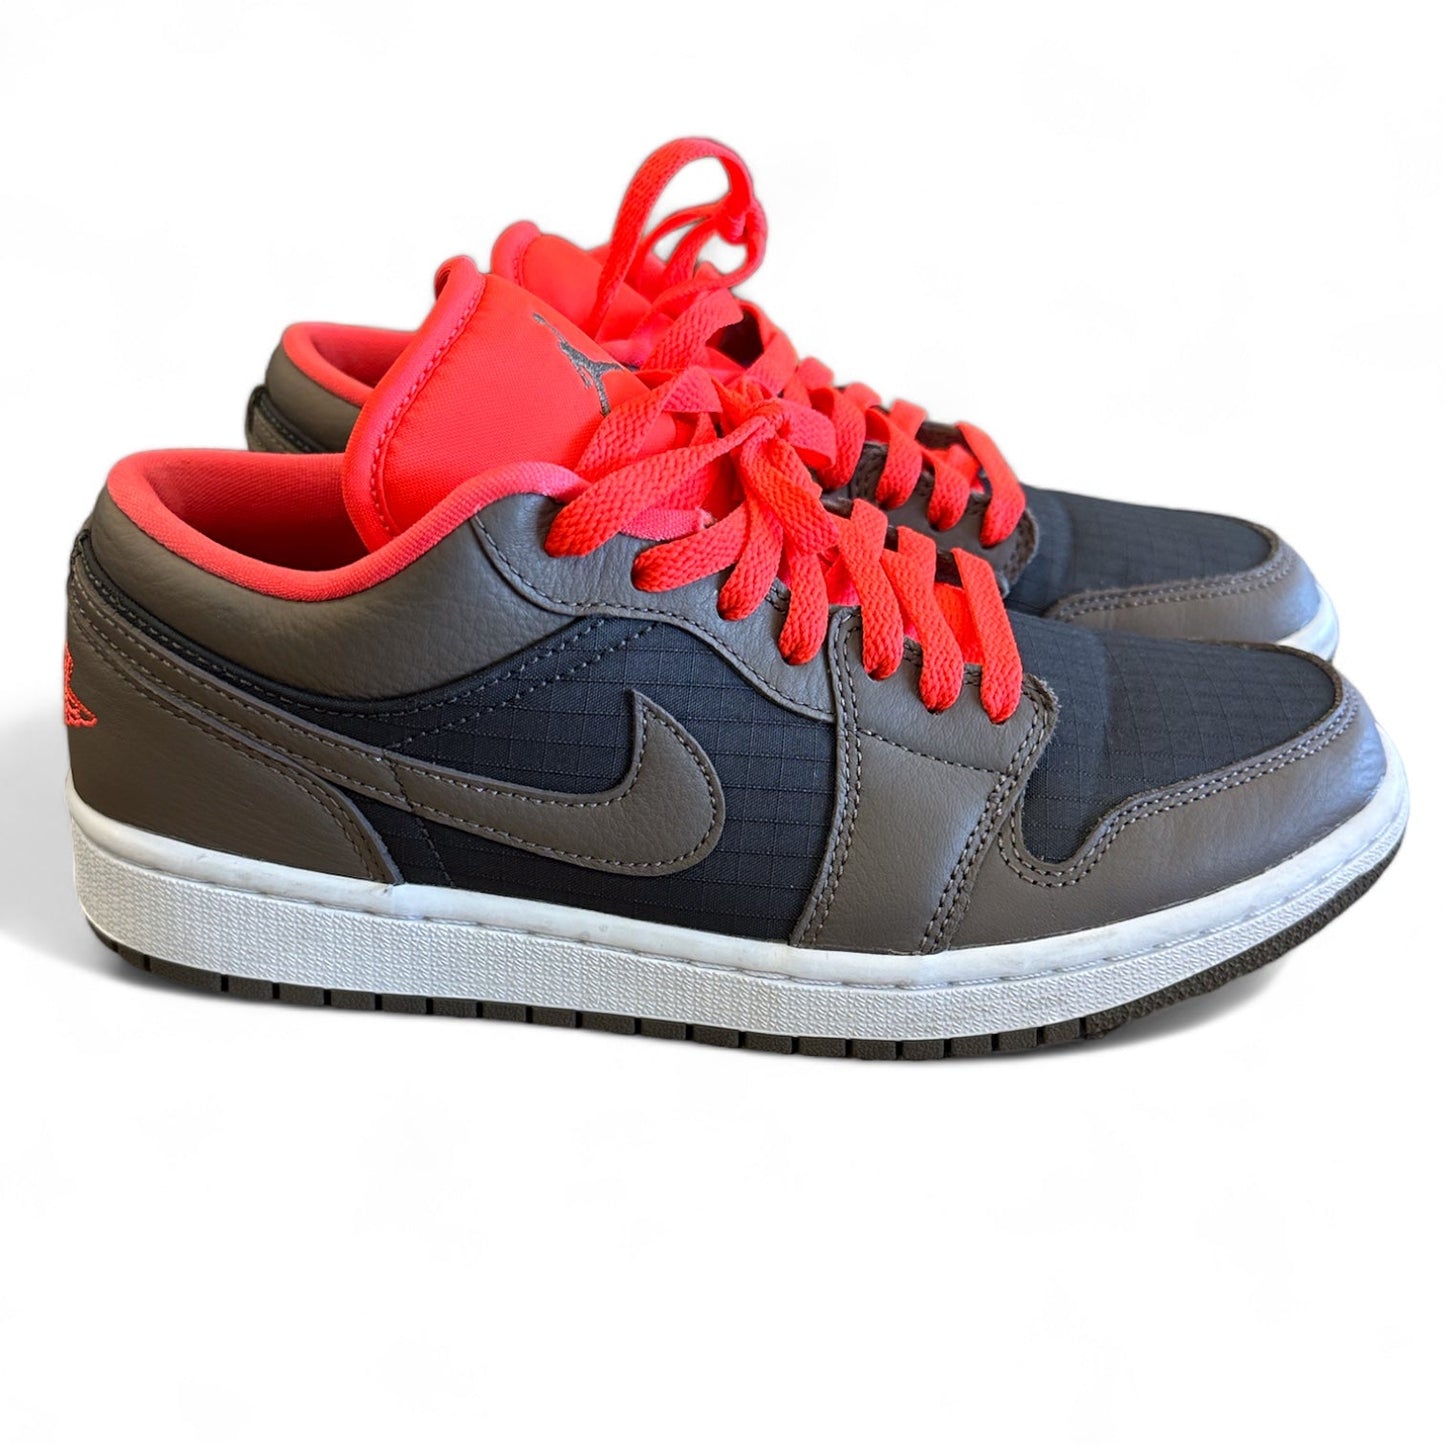 Shoes Sneakers By Jordan  Size: 8.5